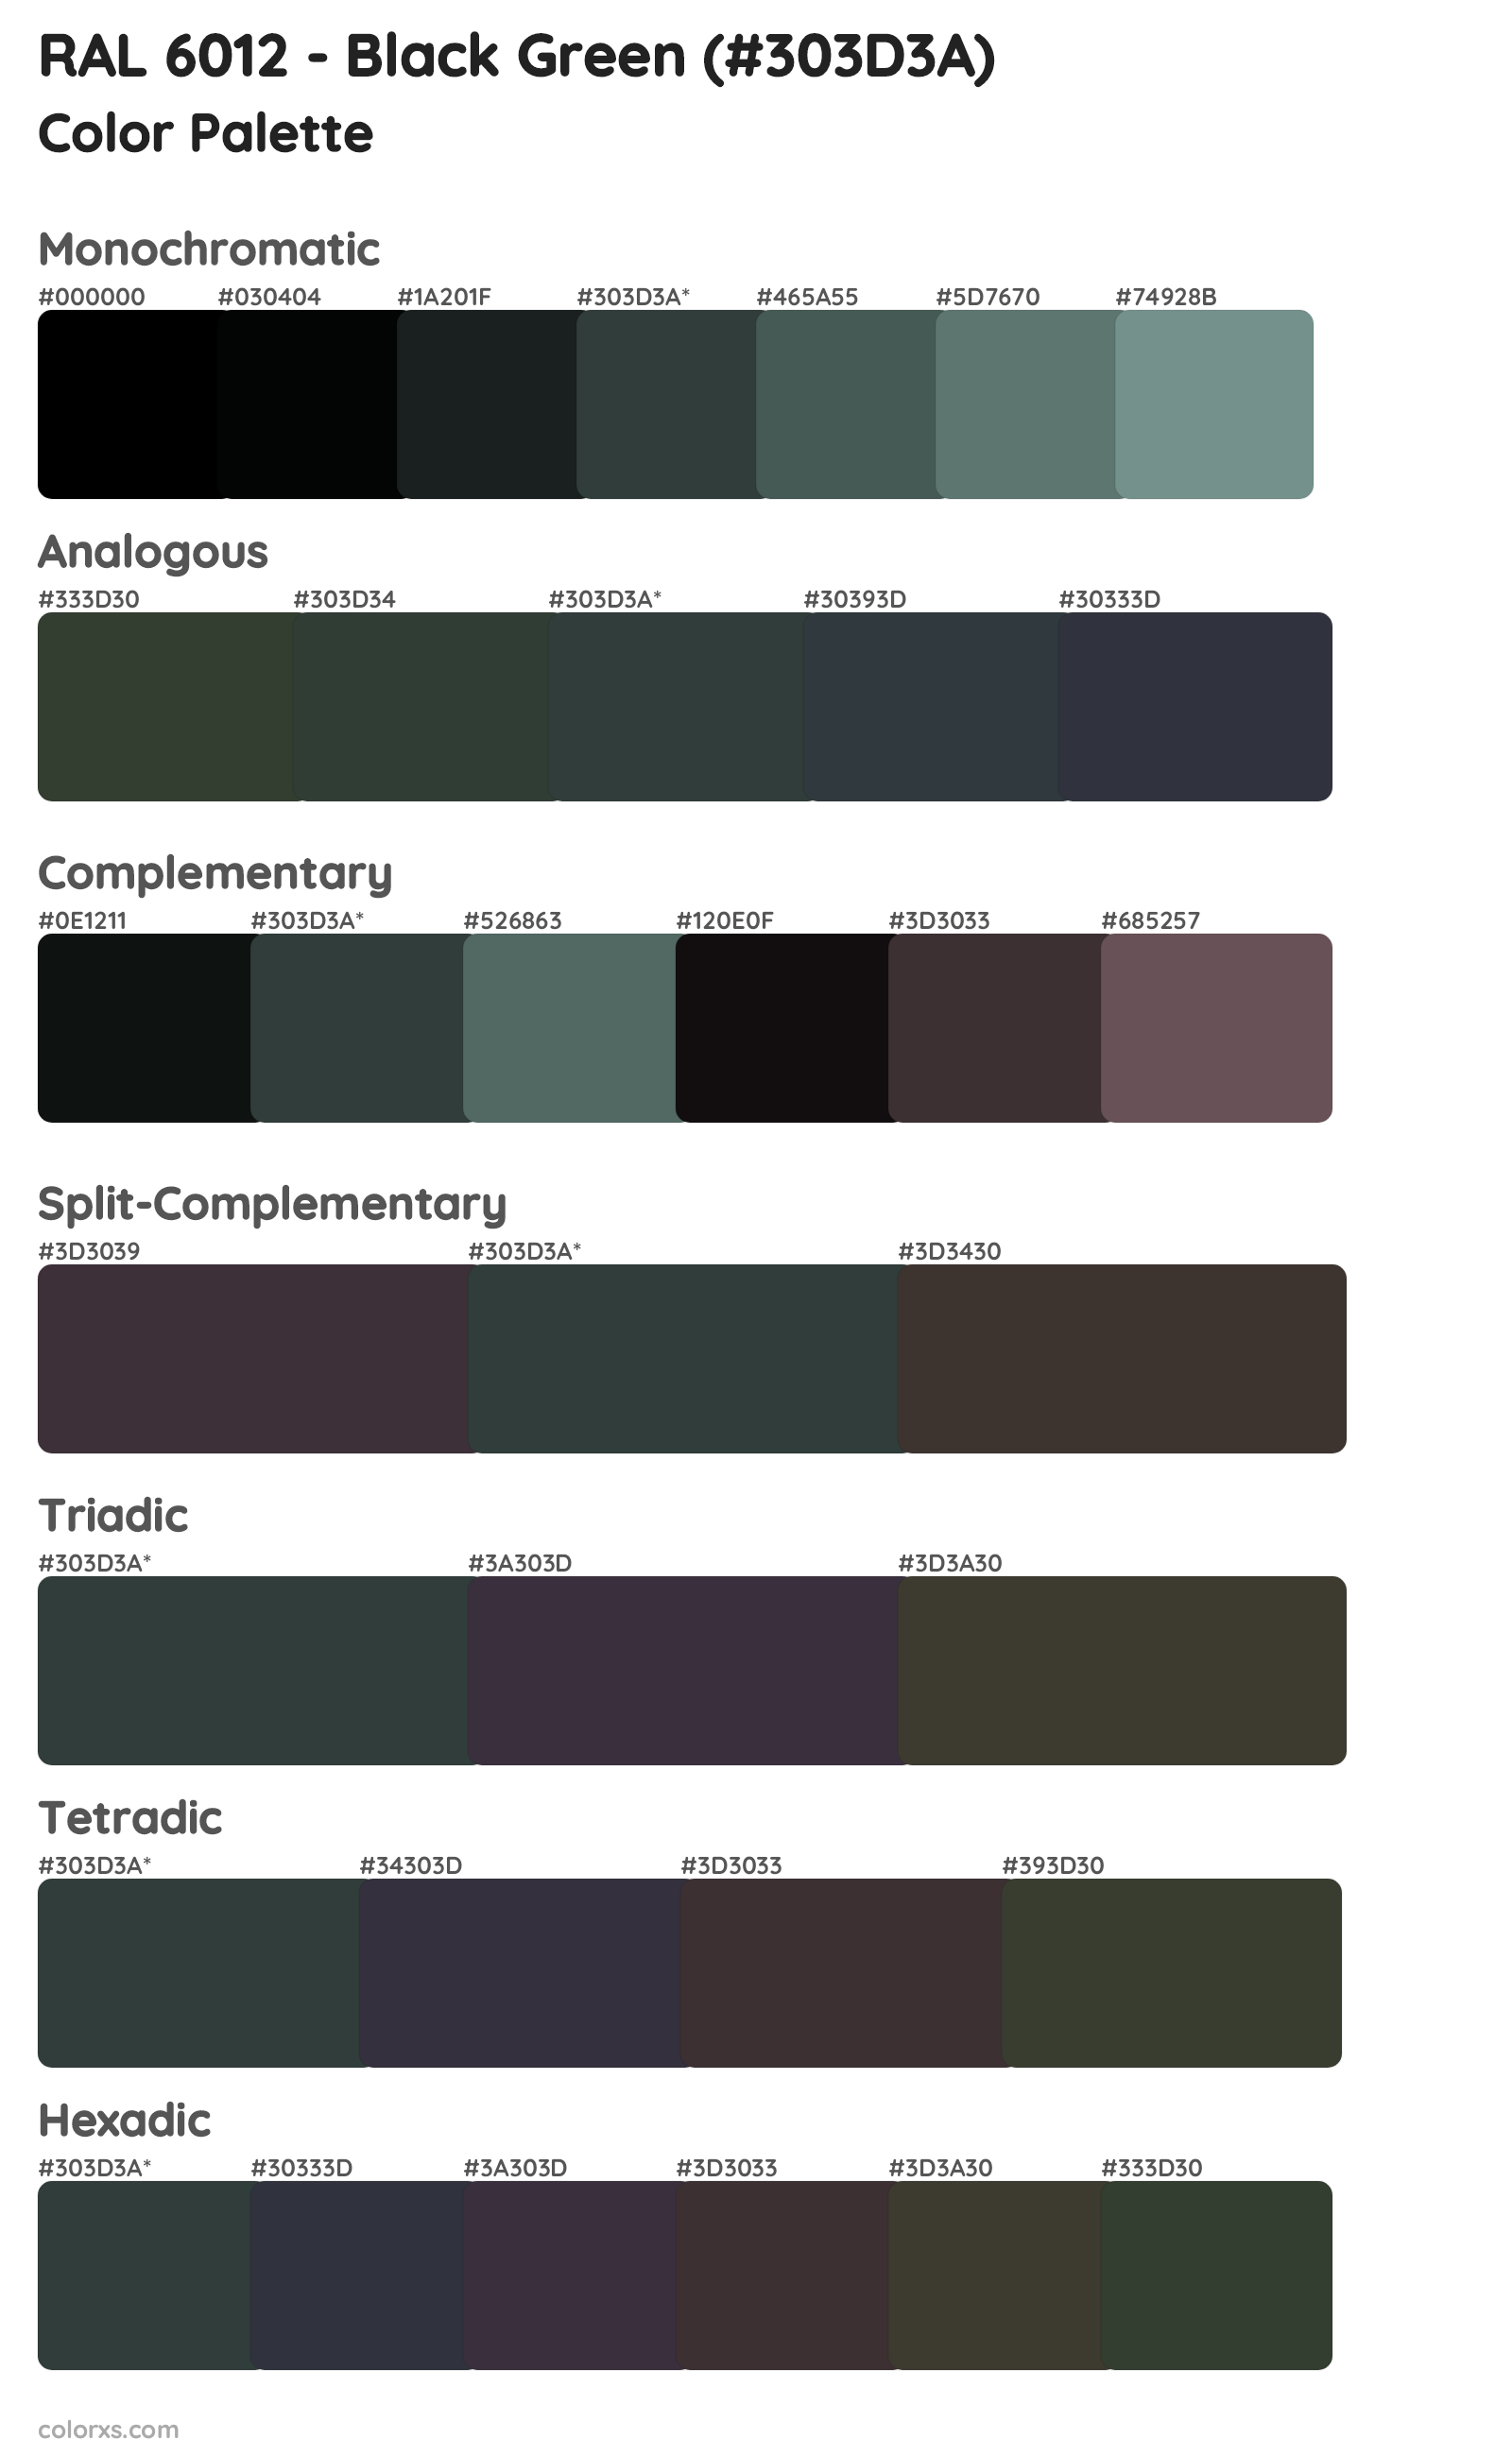 RAL 6012 - Black Green Color Scheme Palettes